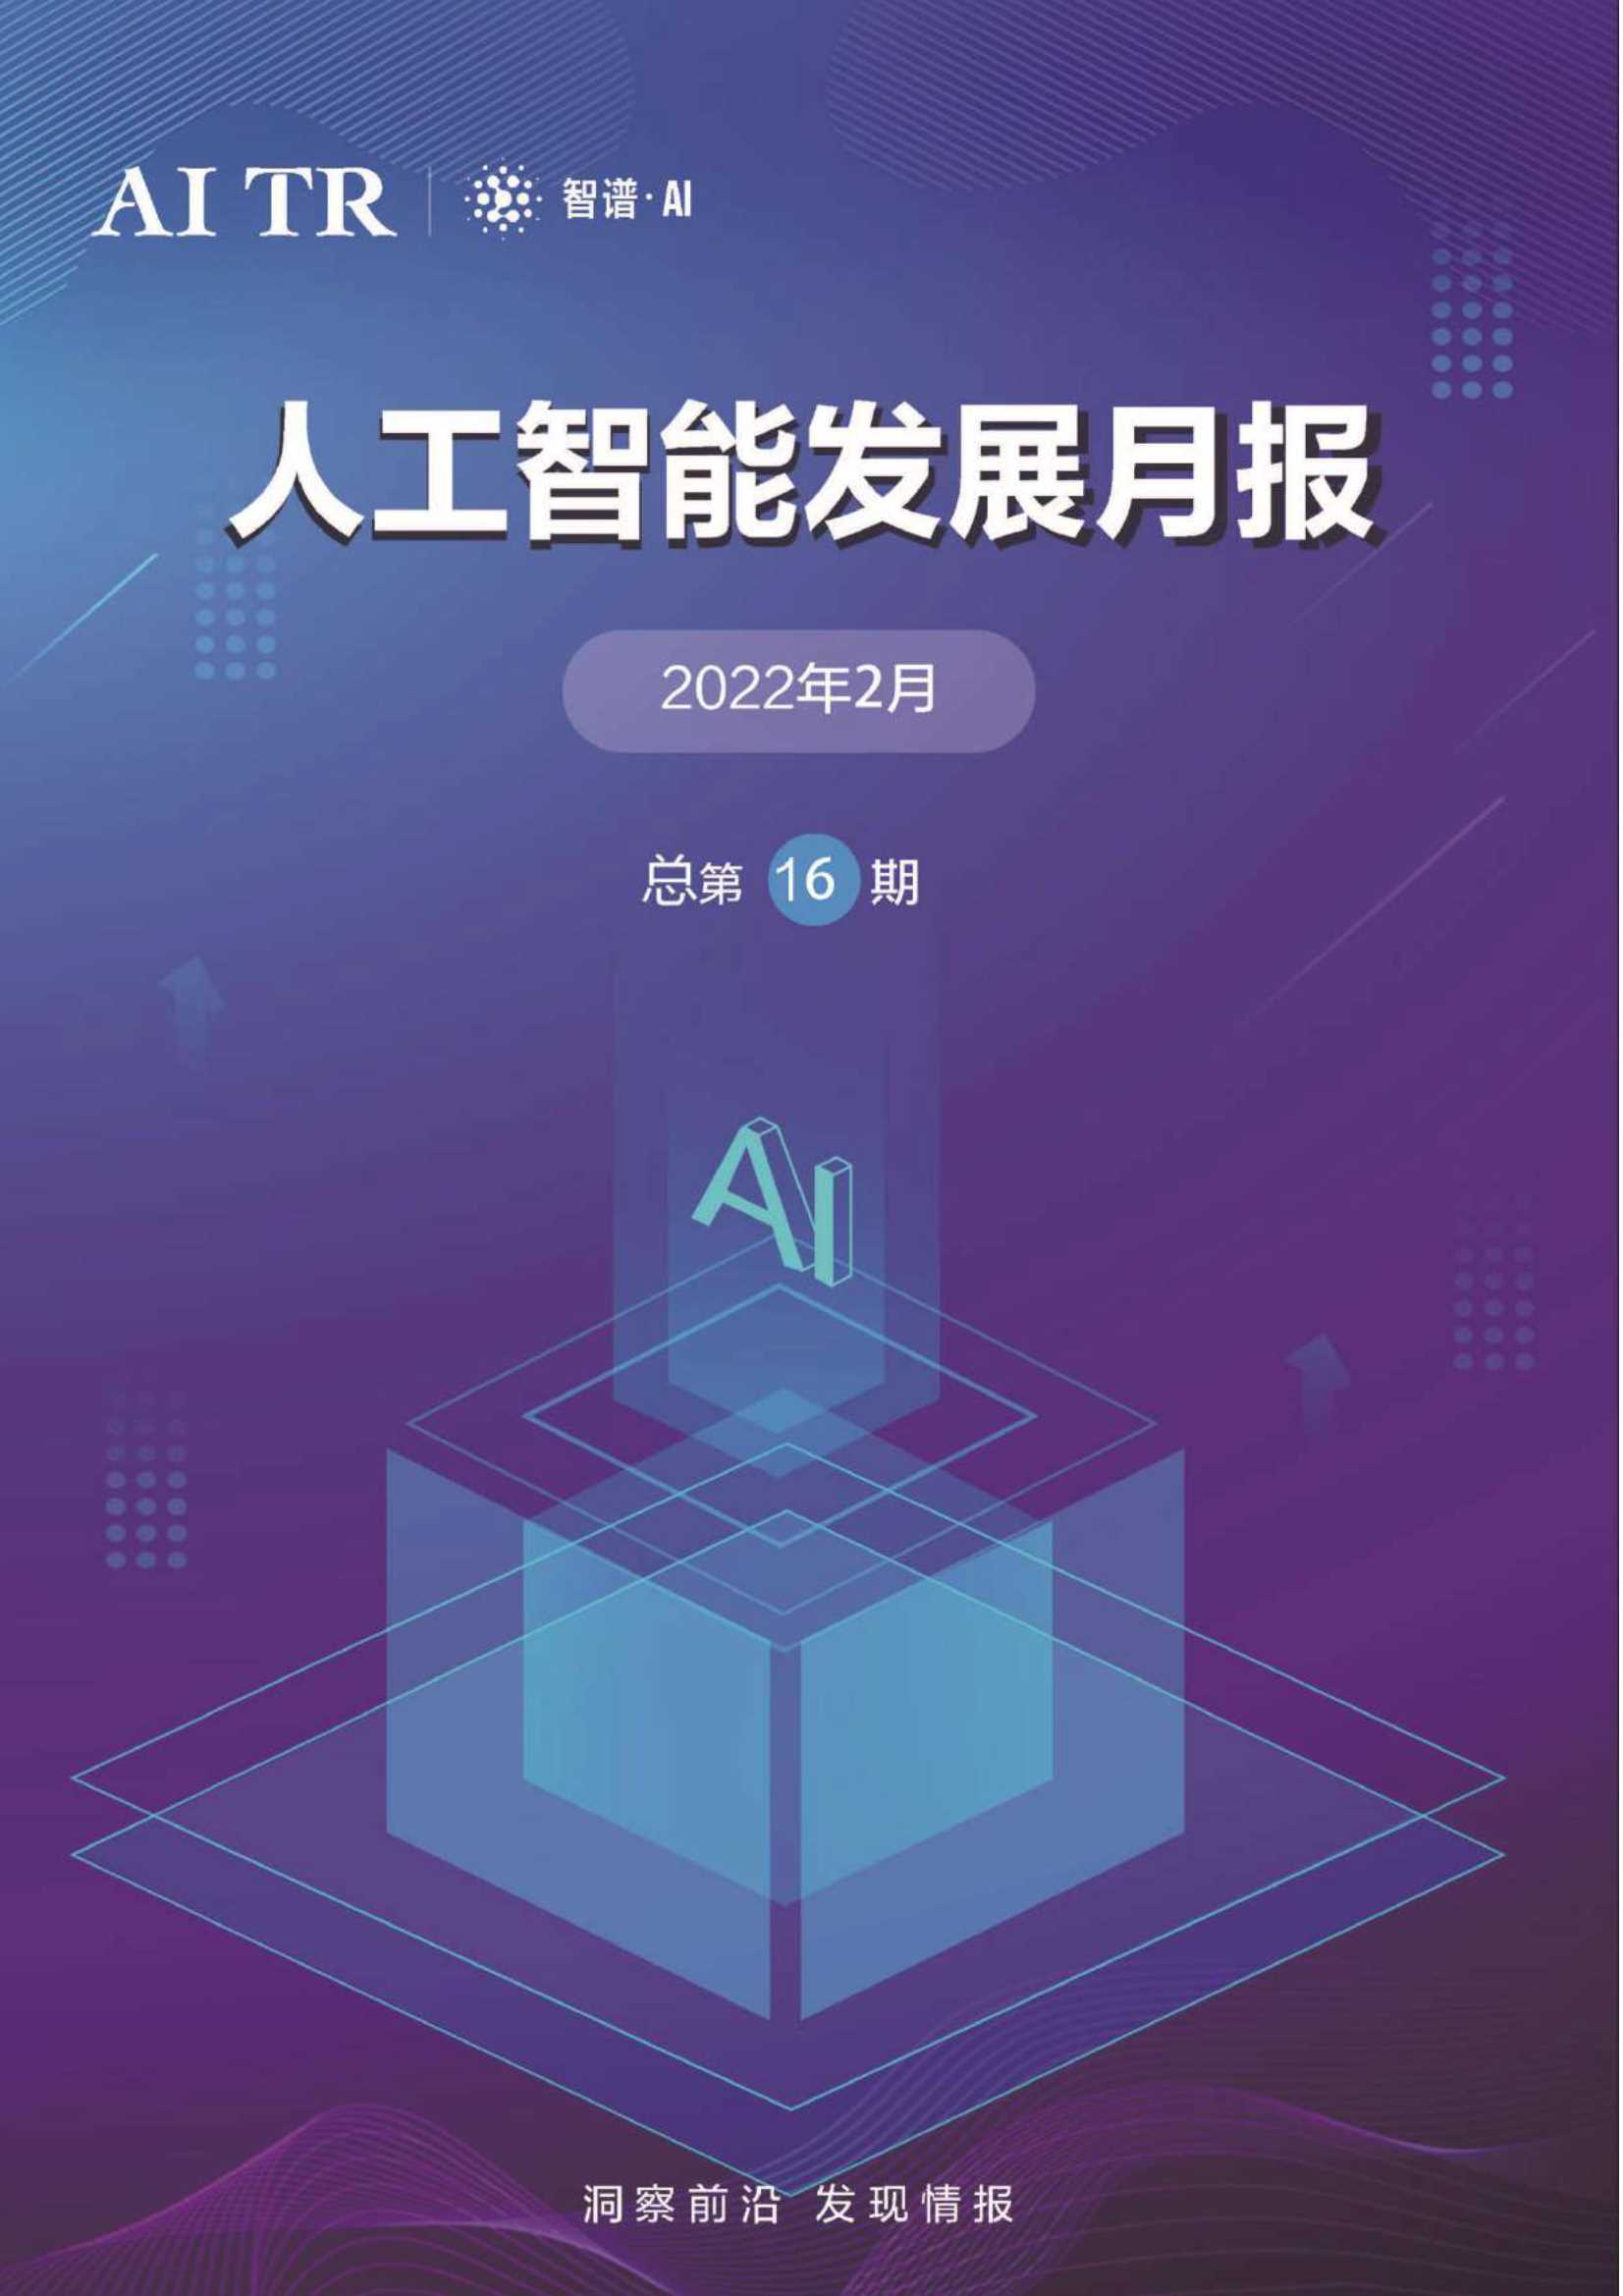 AITR-人工智能发展月报总第16期-2022.03-30页